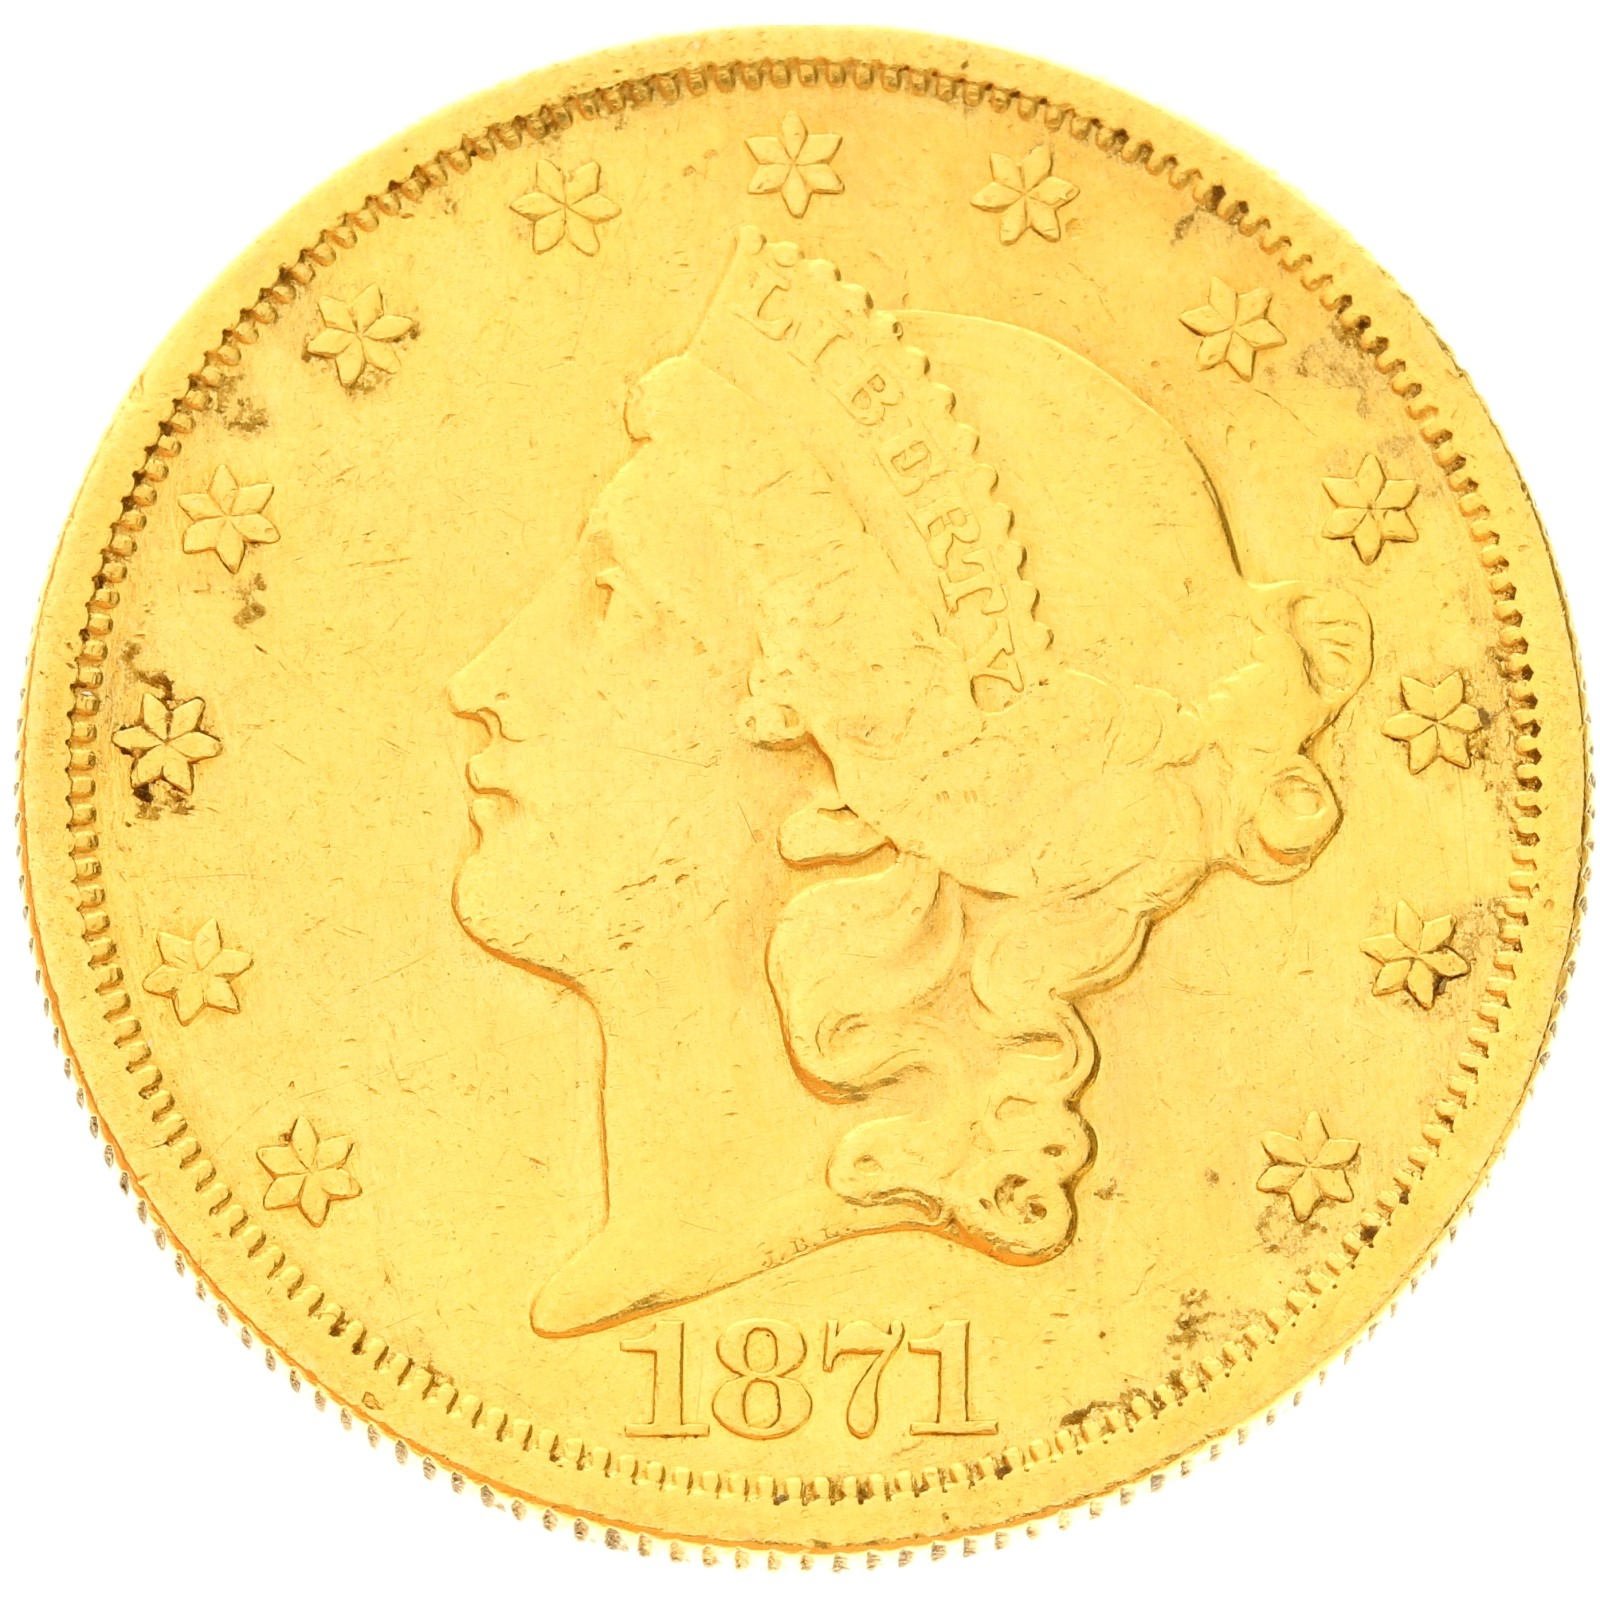 USA - 20 dollars 1871 - S - Liberty head 